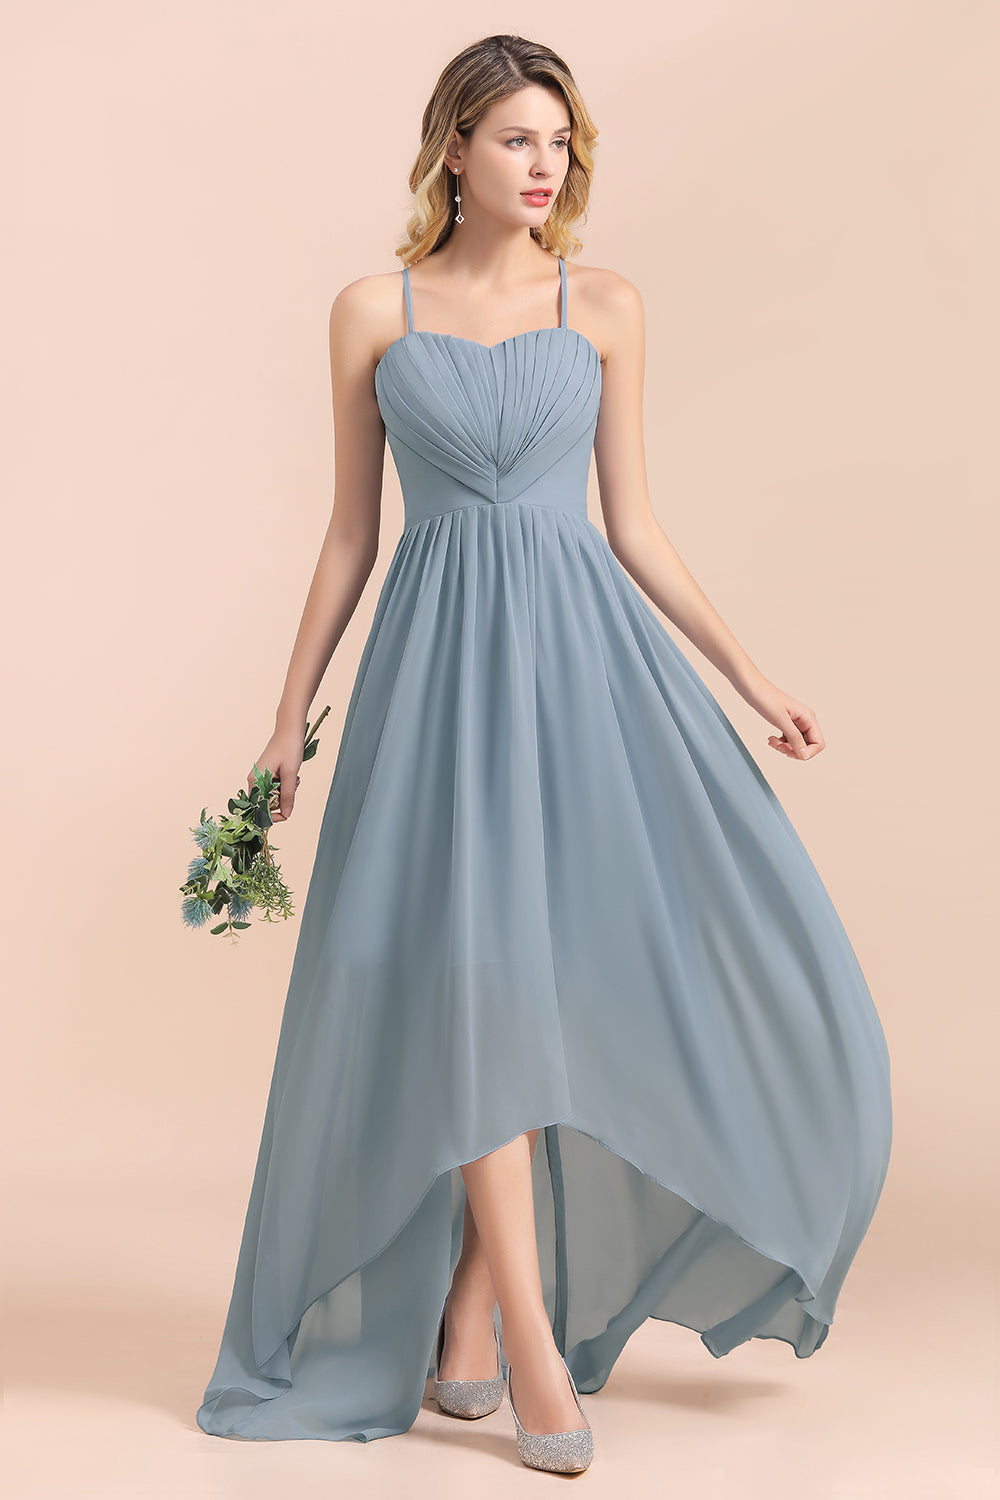 Gorgeous Hi-Lo Heart-Shaped Ruffle Bridesmaid Dress with Spaghetti Straps-27dress